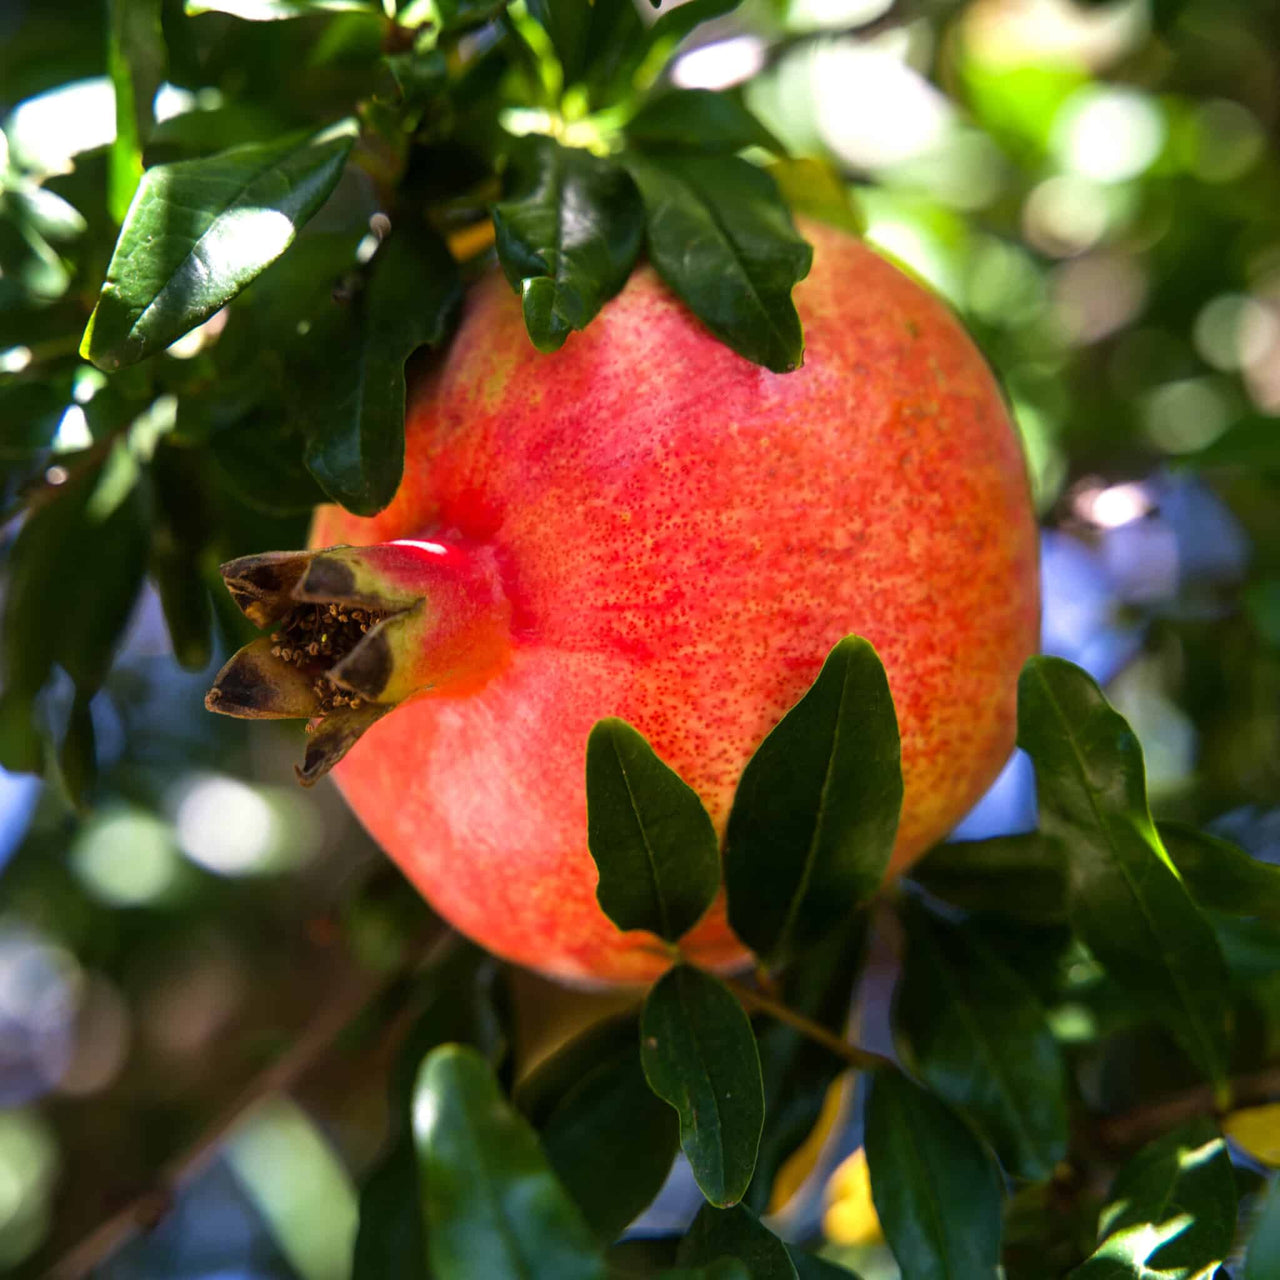 Persian Pomegranate fruit on tree